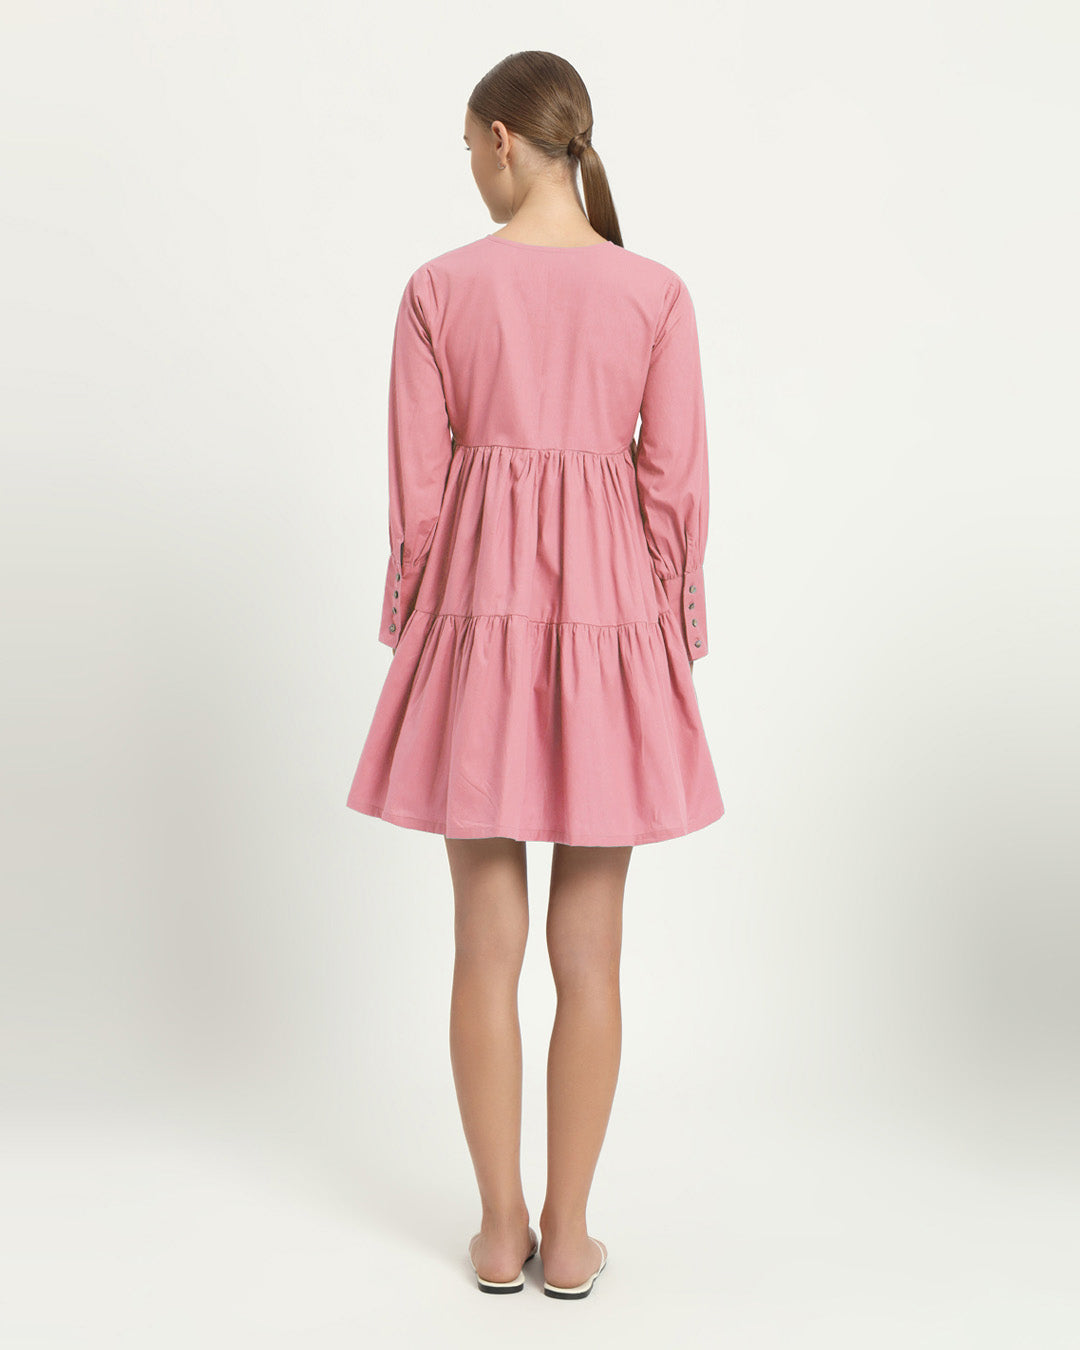 The Brandis Fondant Pink Cotton Dress